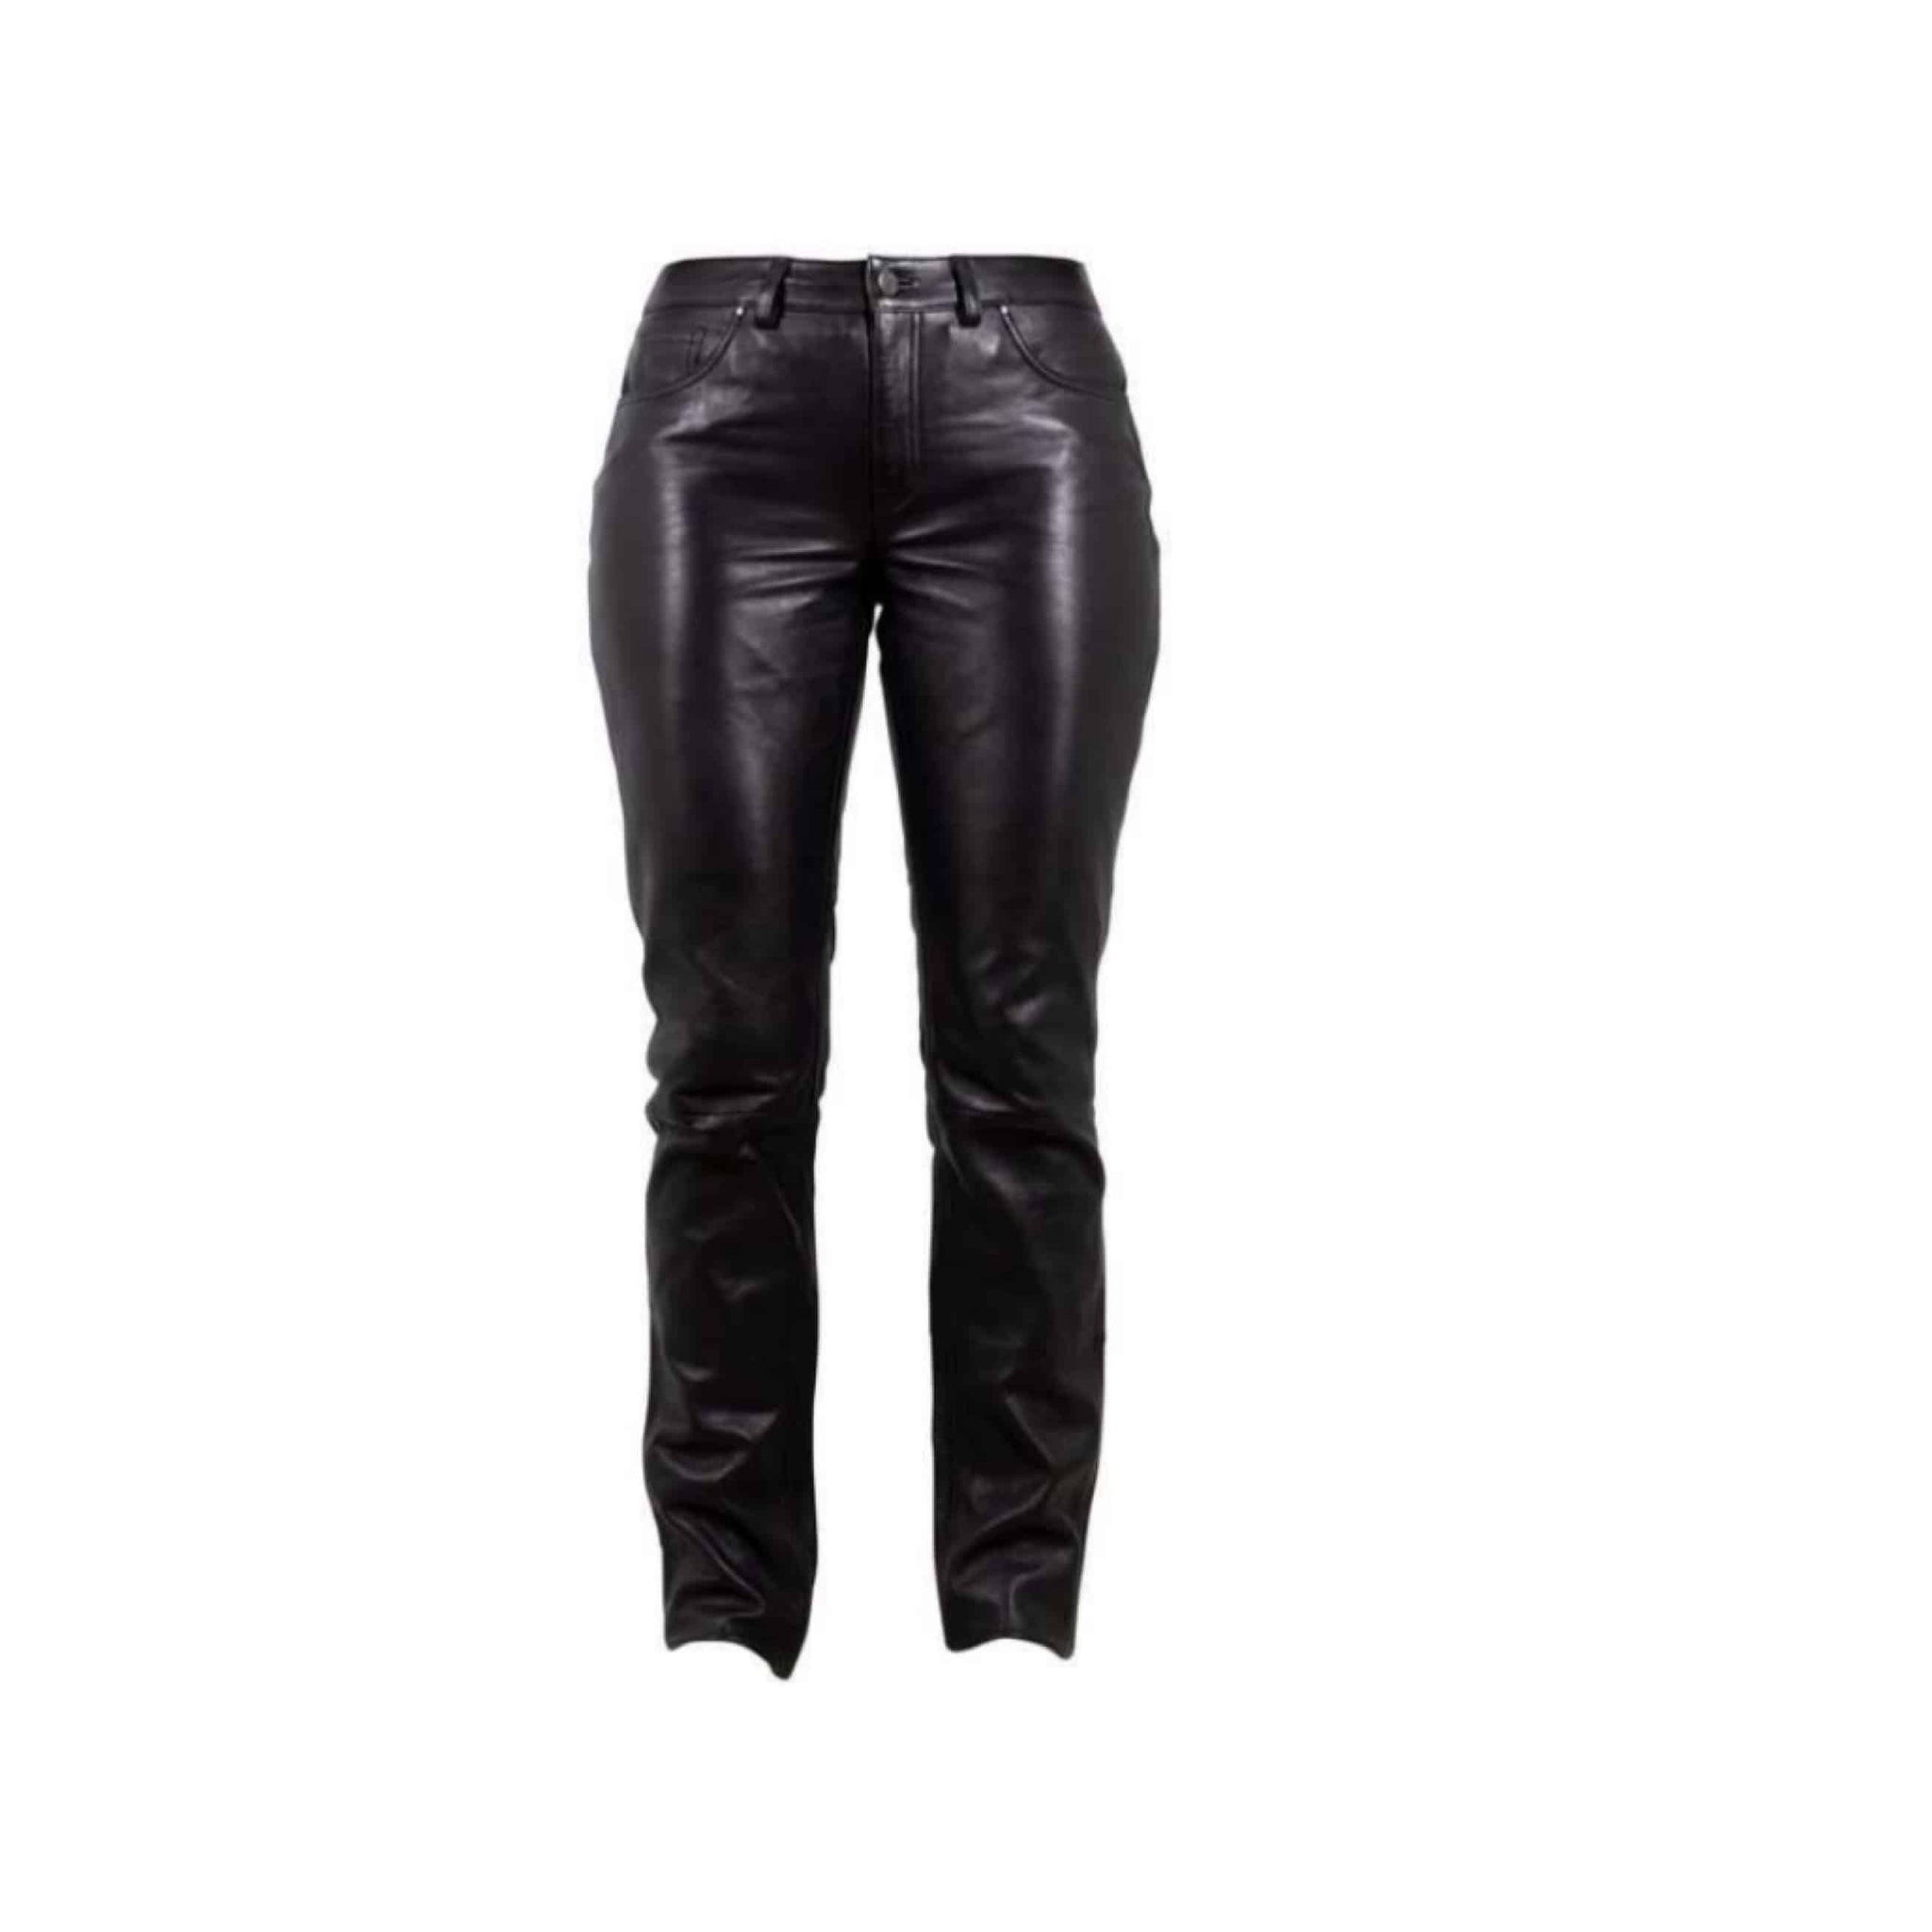 Mauritius Zazoe Leather Pants in Black